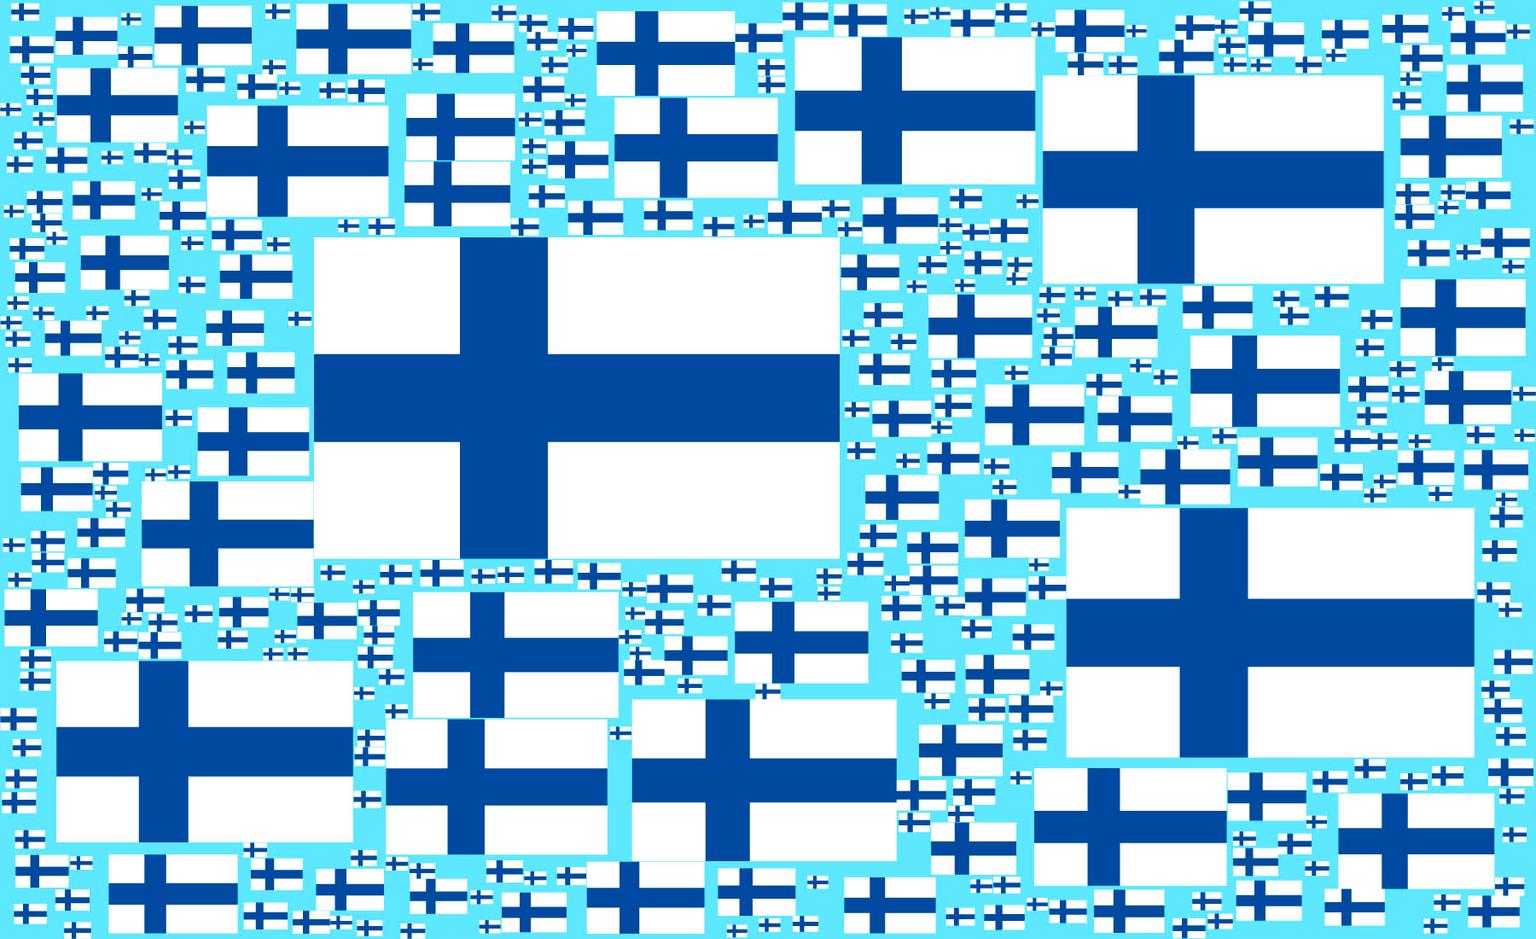 Image for entry 'Finnish Fractal Flag'